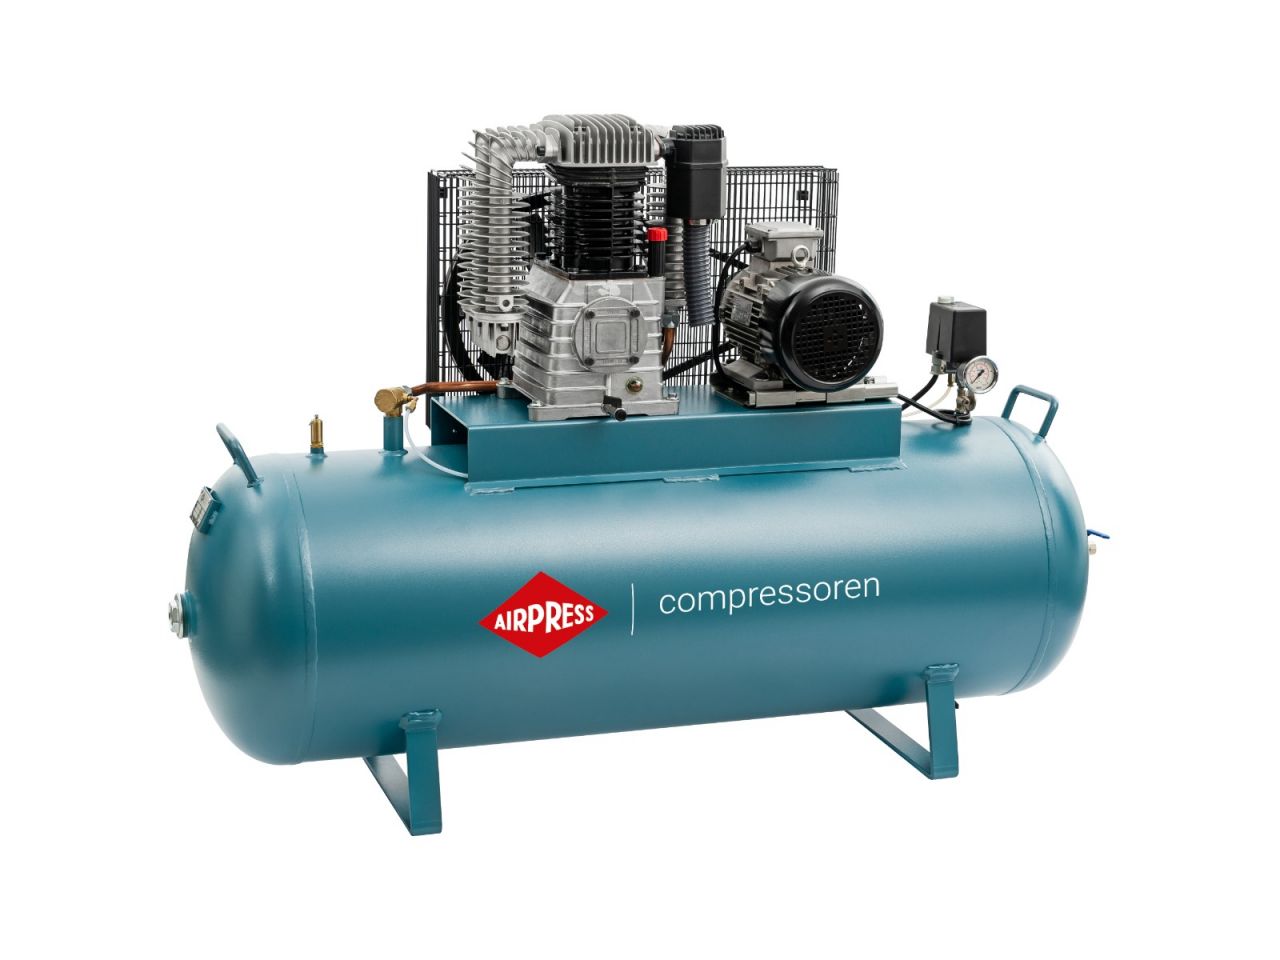 Compresor K 300-700